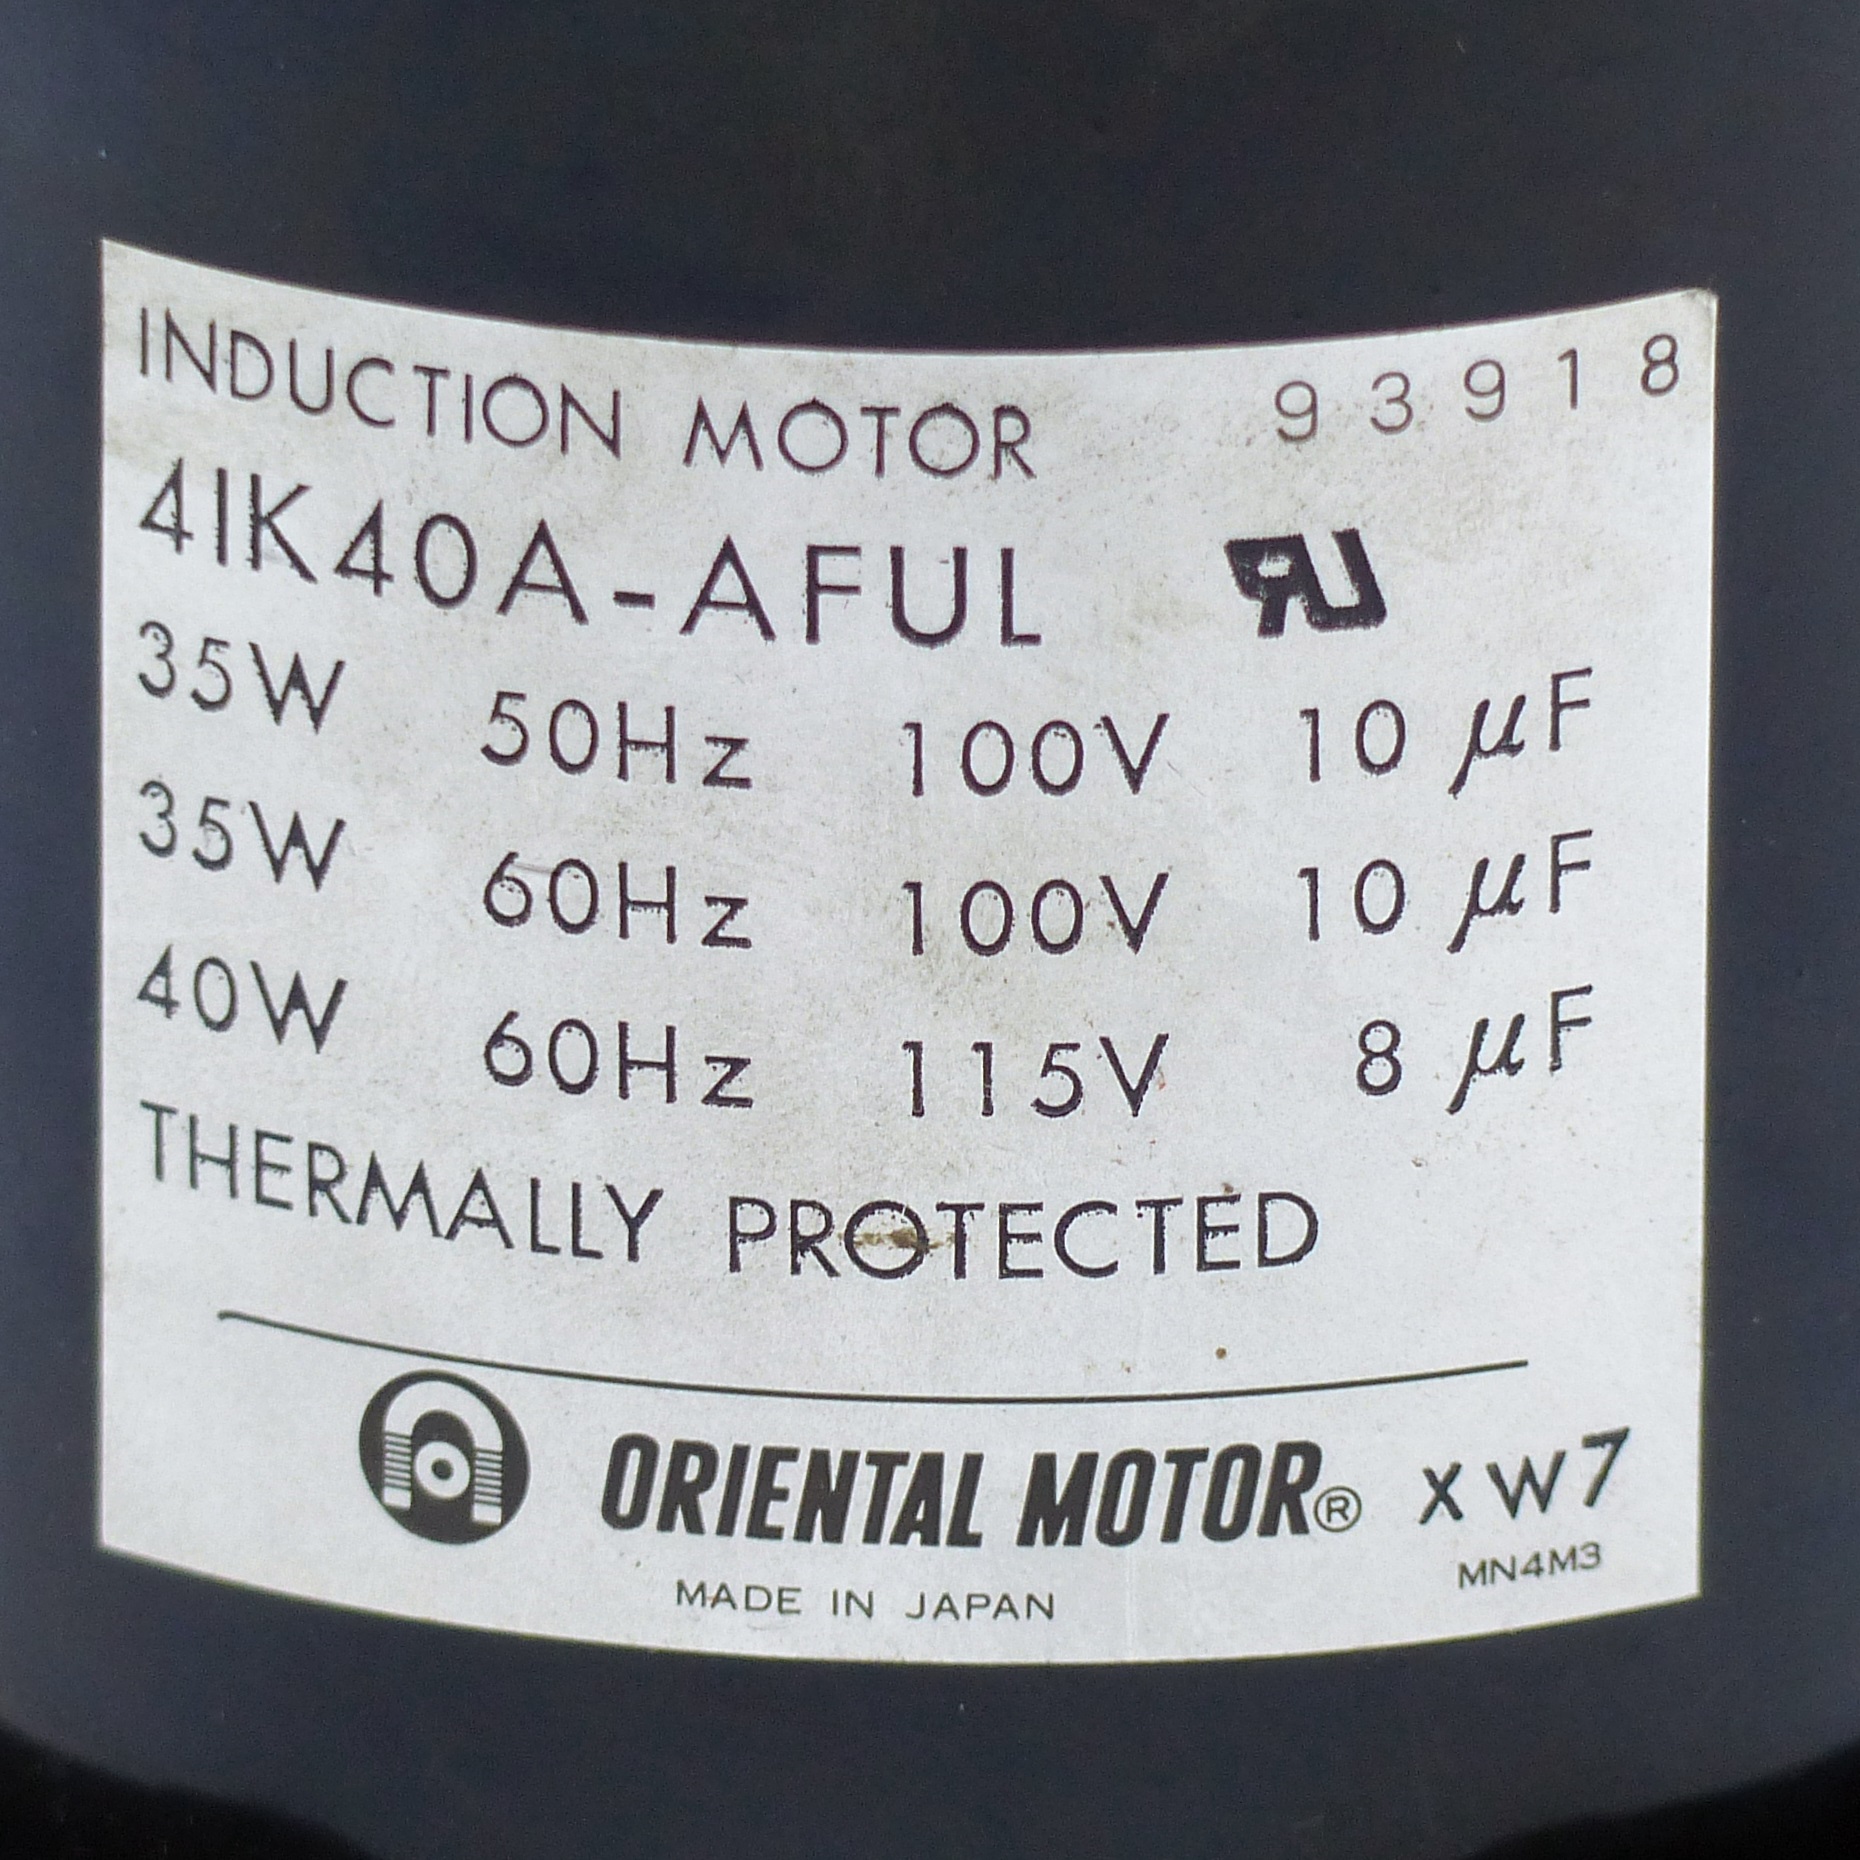 Induction Motor 4IK40A-AFUL 